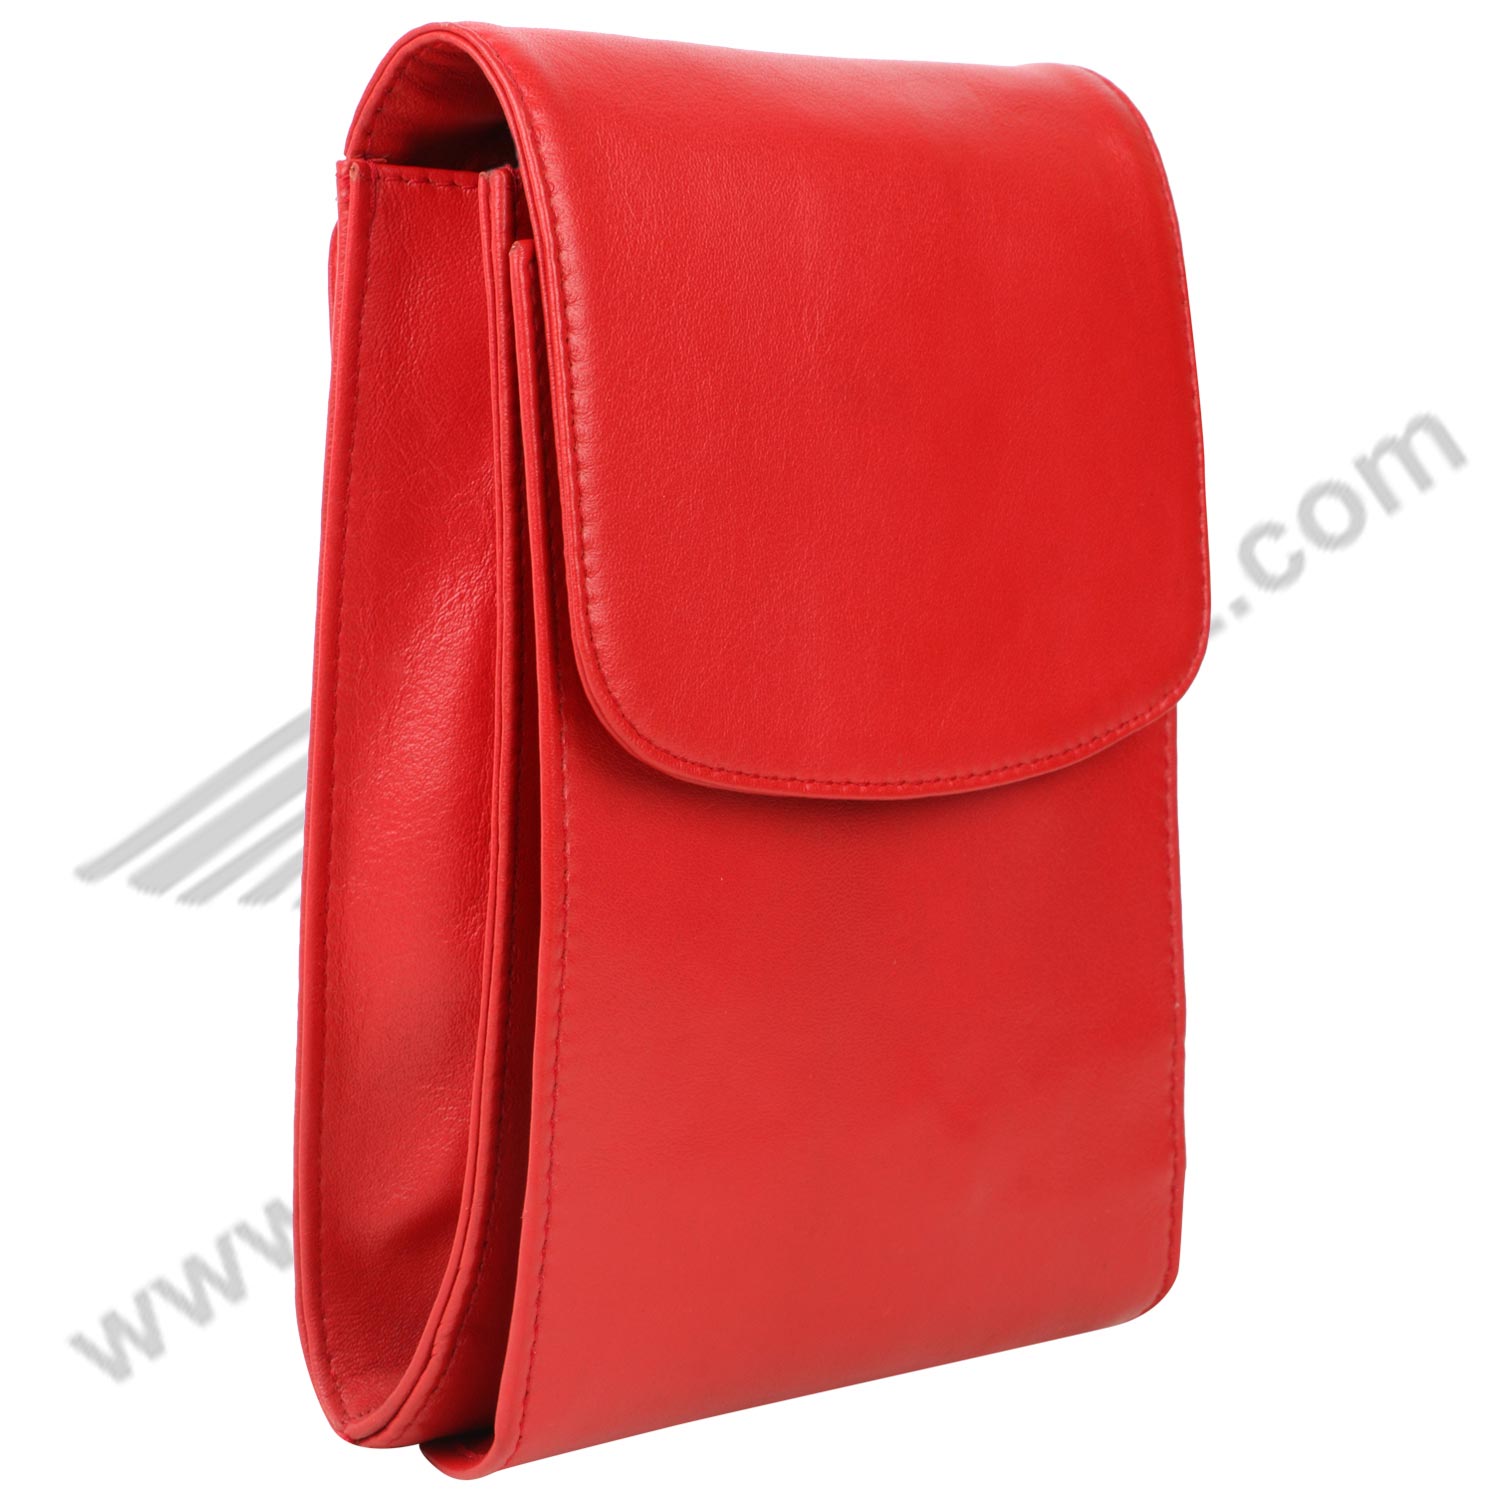 Side image of red MULTI POCKET CROSS BODY HAND BAG